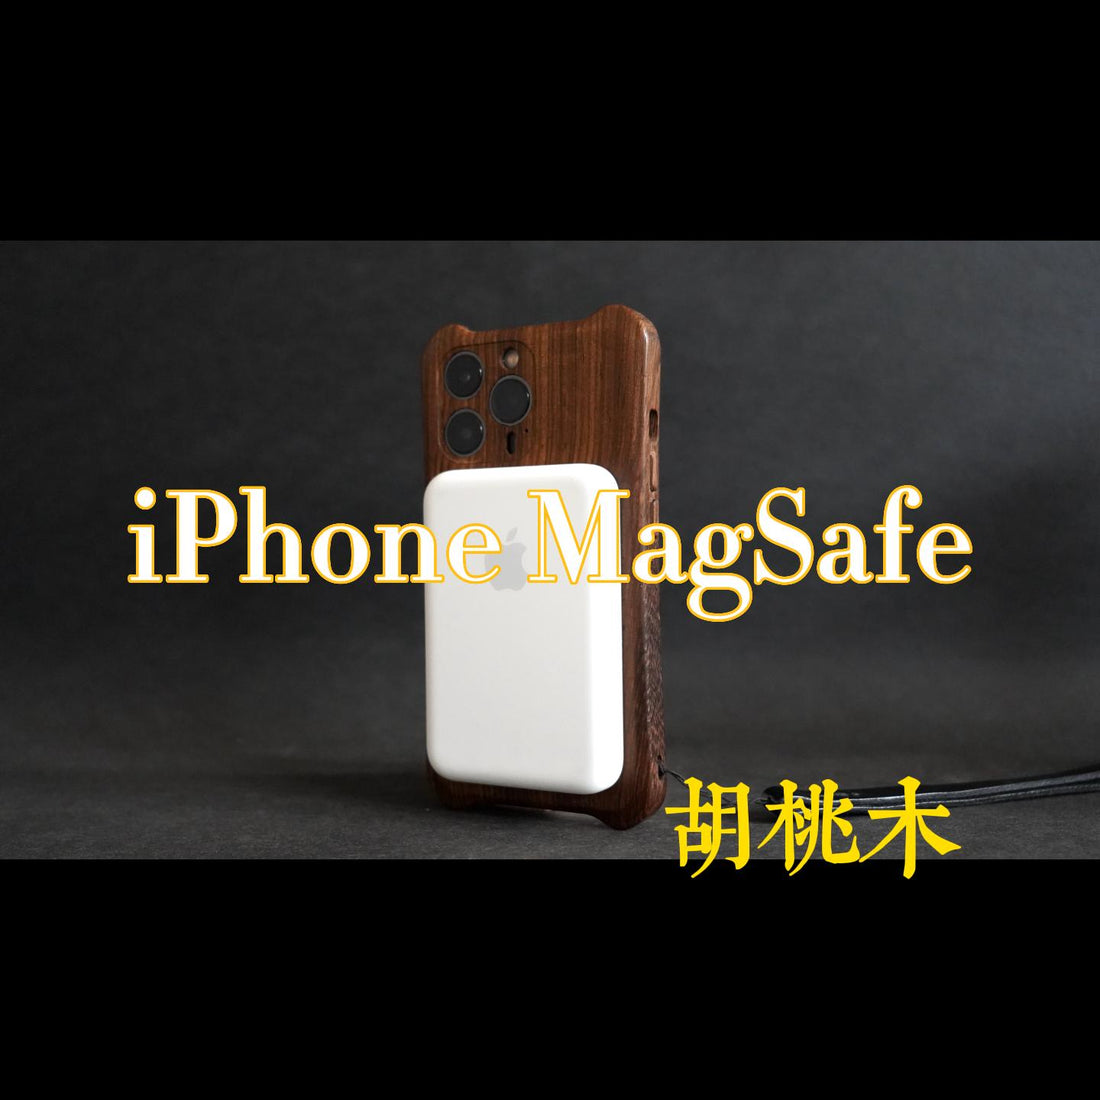 iPhone MageSafe Cases